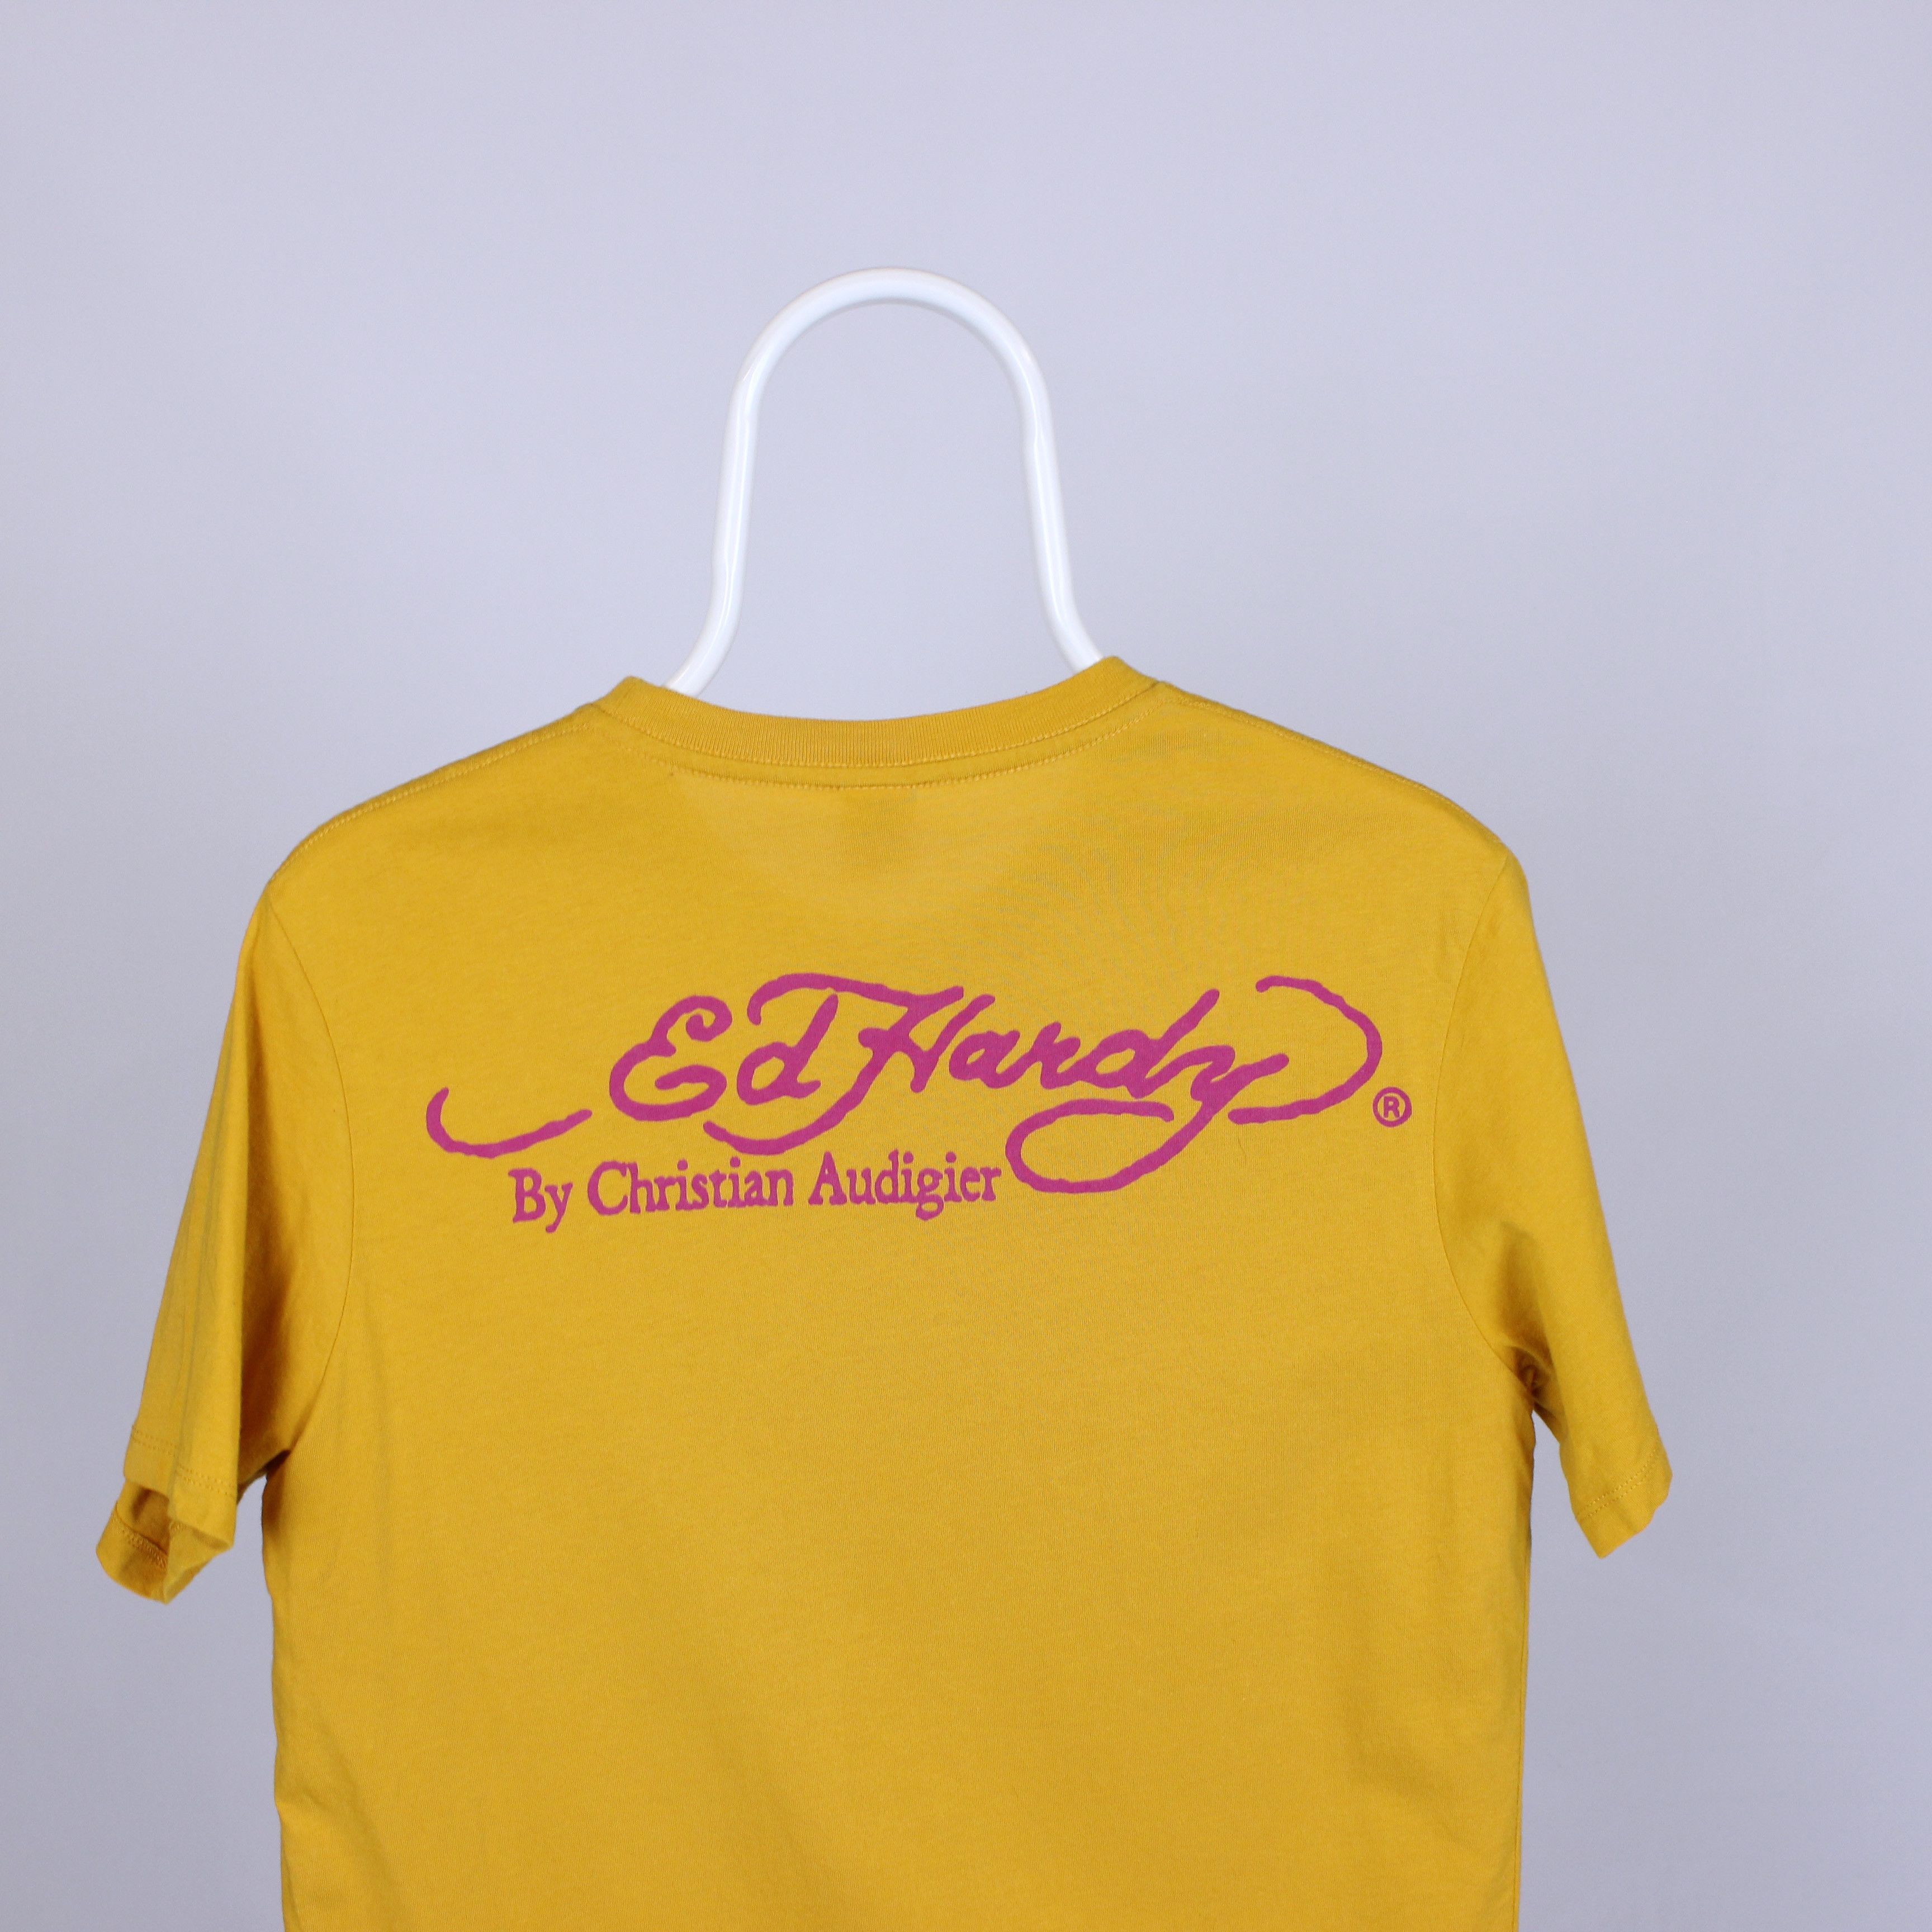 Christian Audigier Vintage ed hardy christian audigier t shirt rare big logo Size US S / EU 44-46 / 1 - 7 Preview